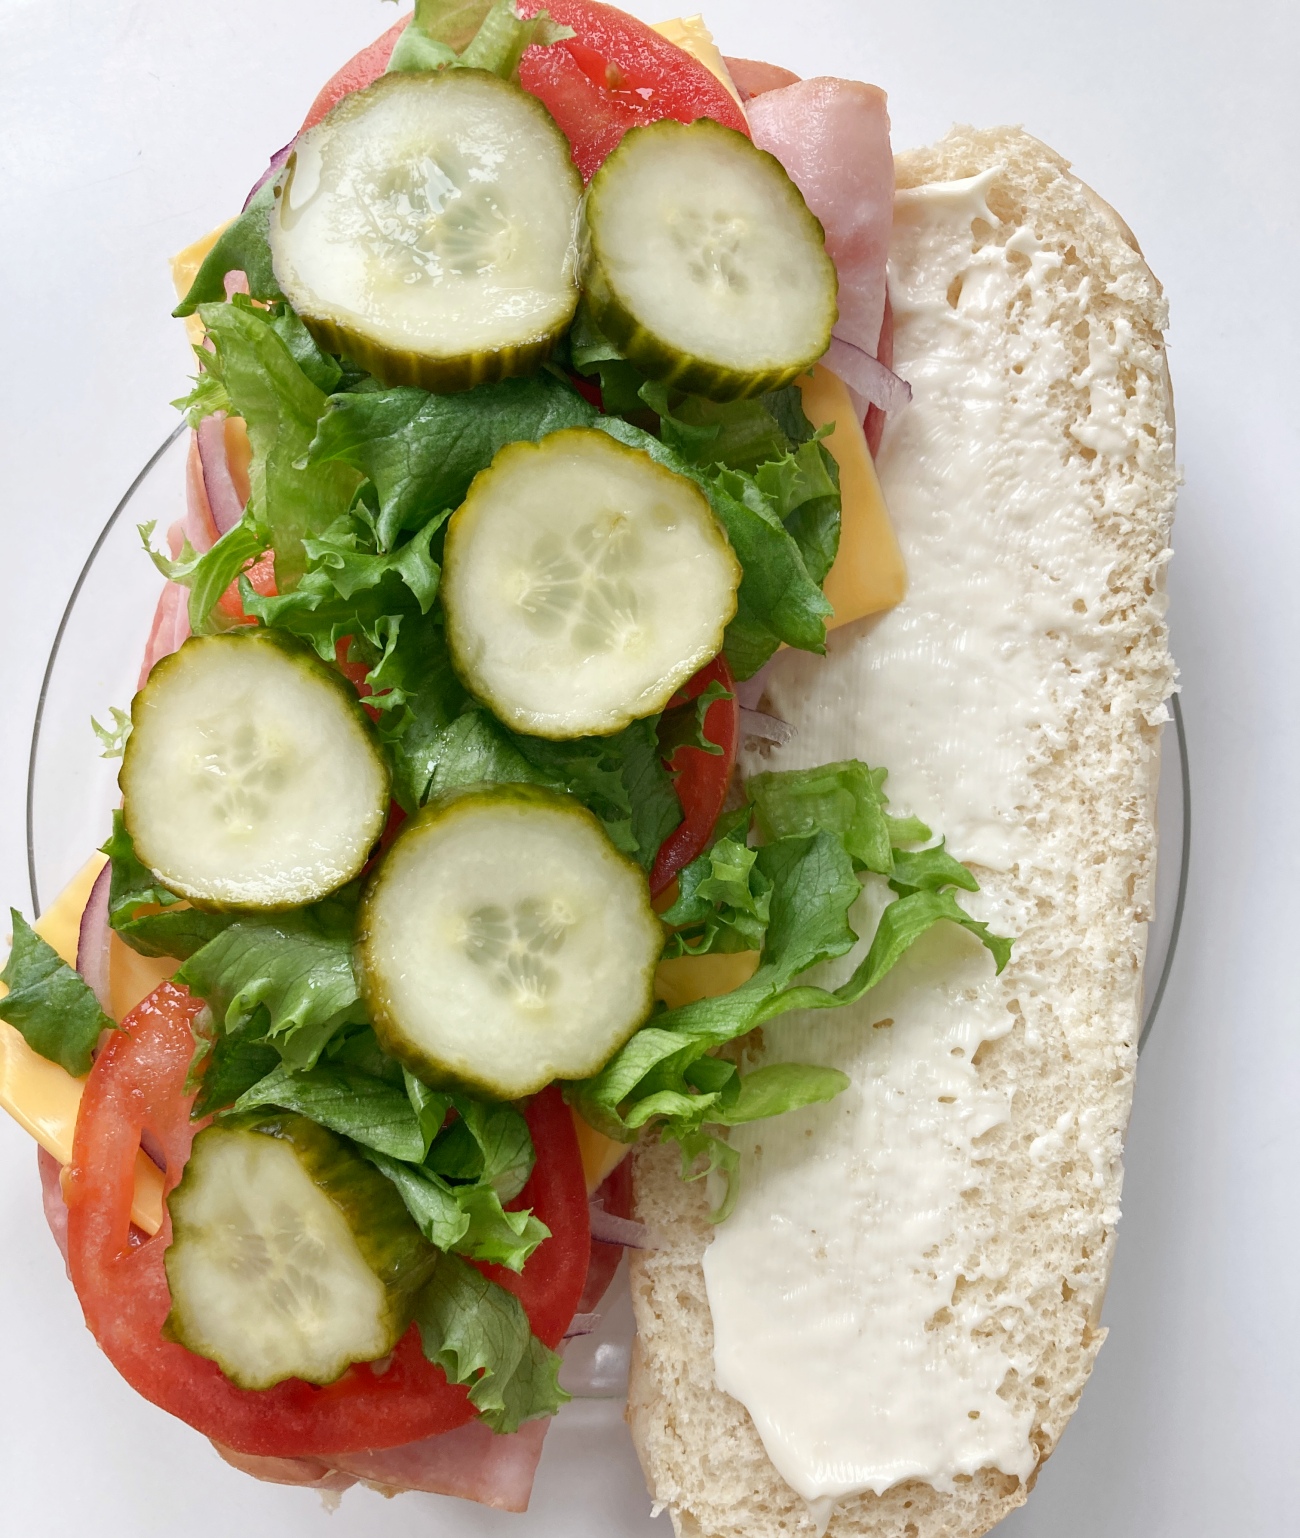 Kmart Sub Sandwiches